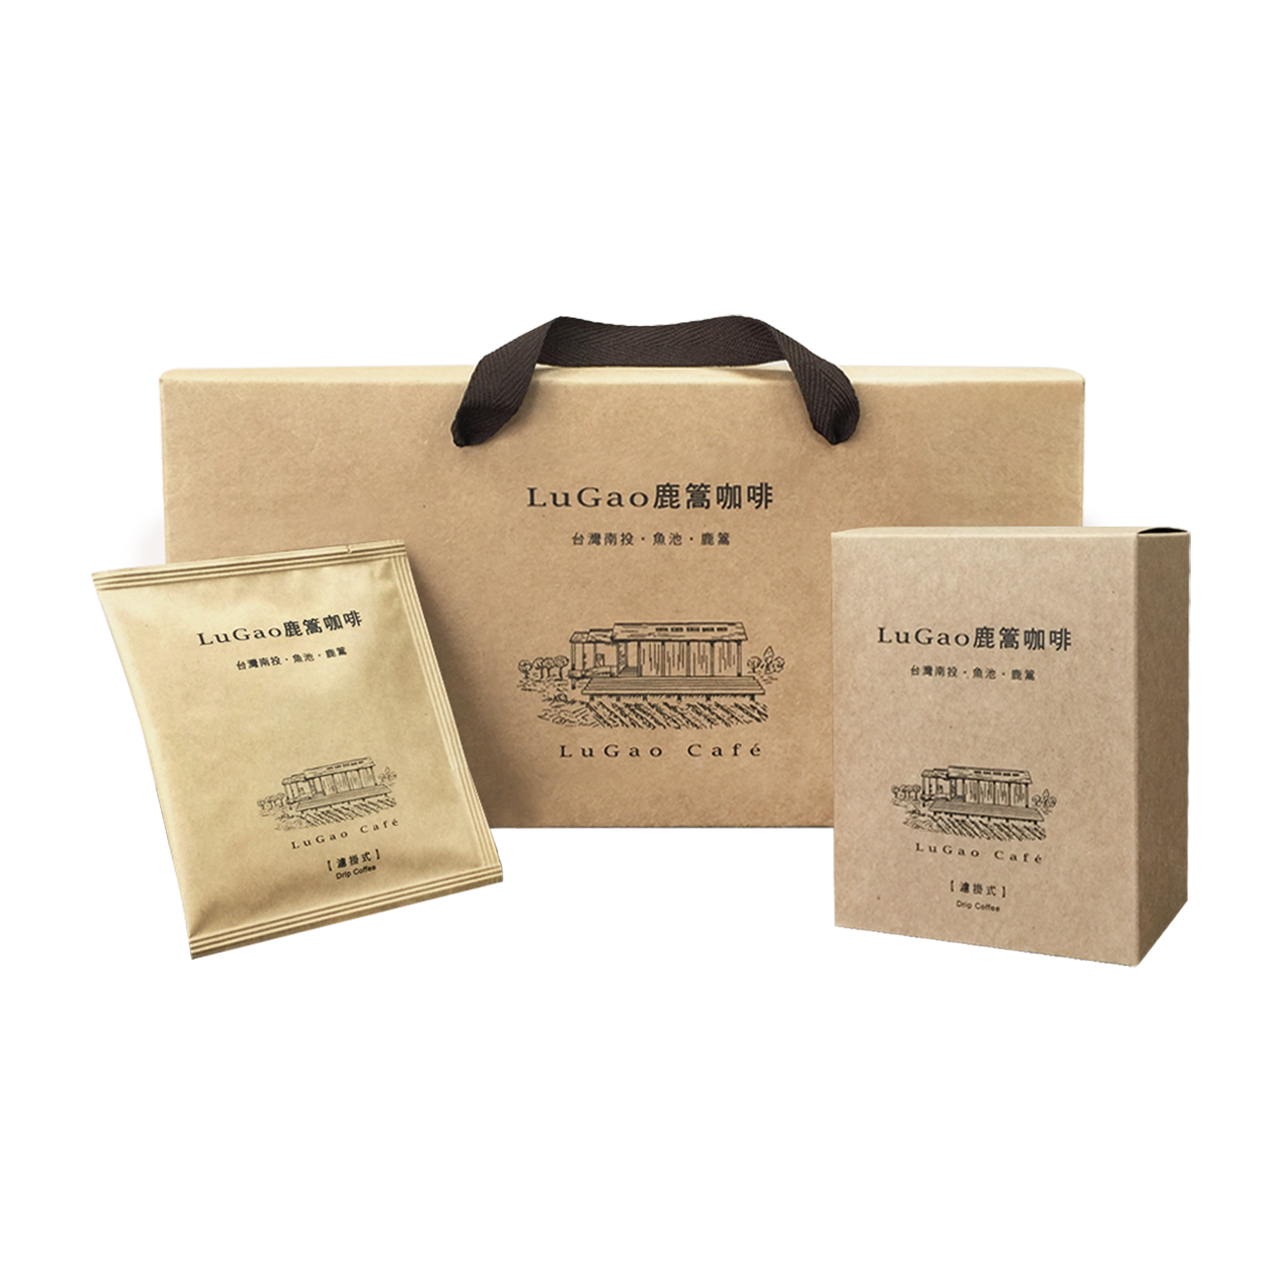 LuGao Coffee Gift box